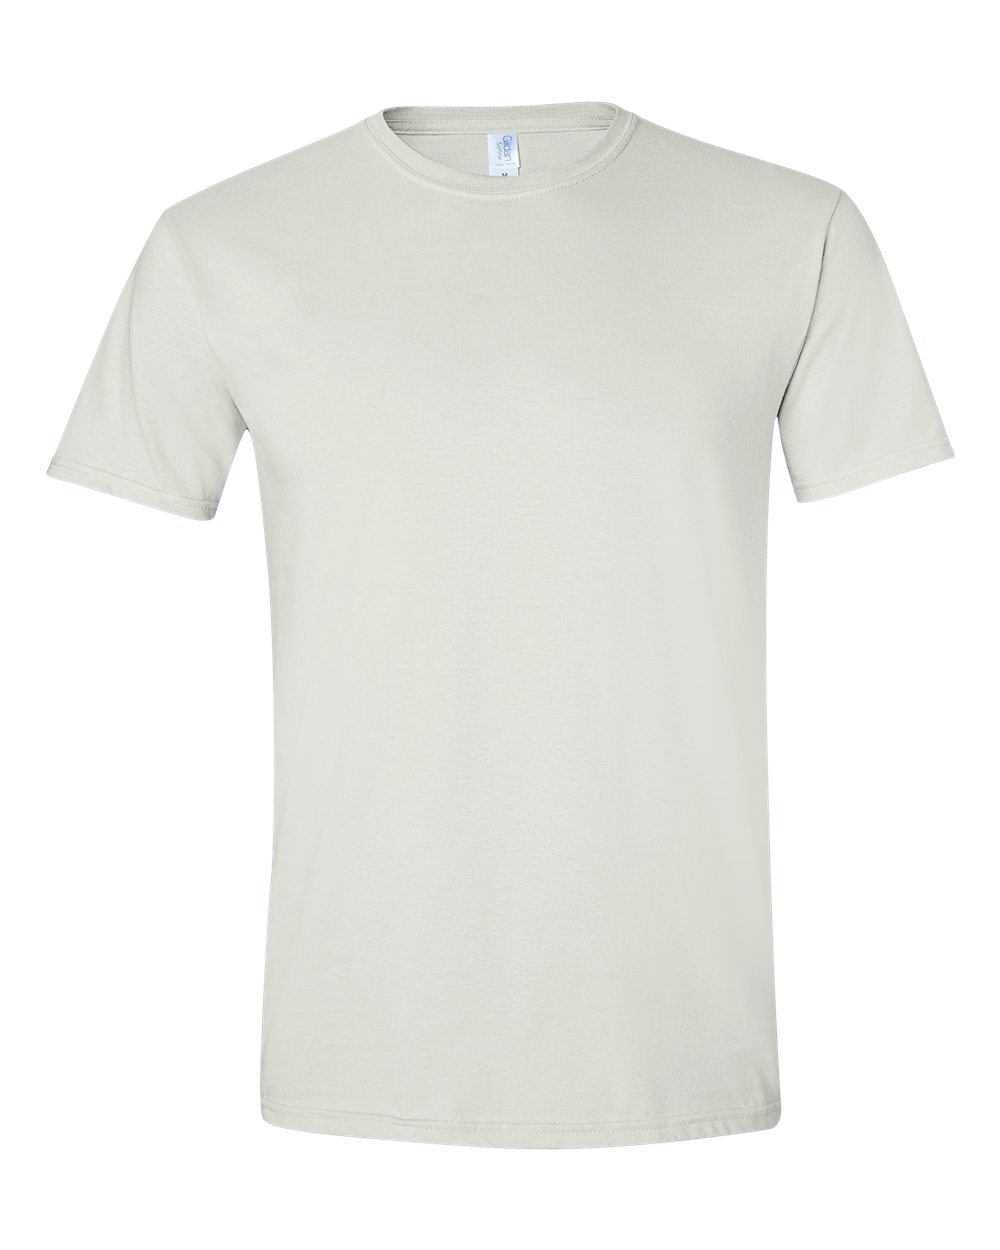 Gildan 64000 Heather Royal Adult Softstyle® 4.5 Oz. T Shirt